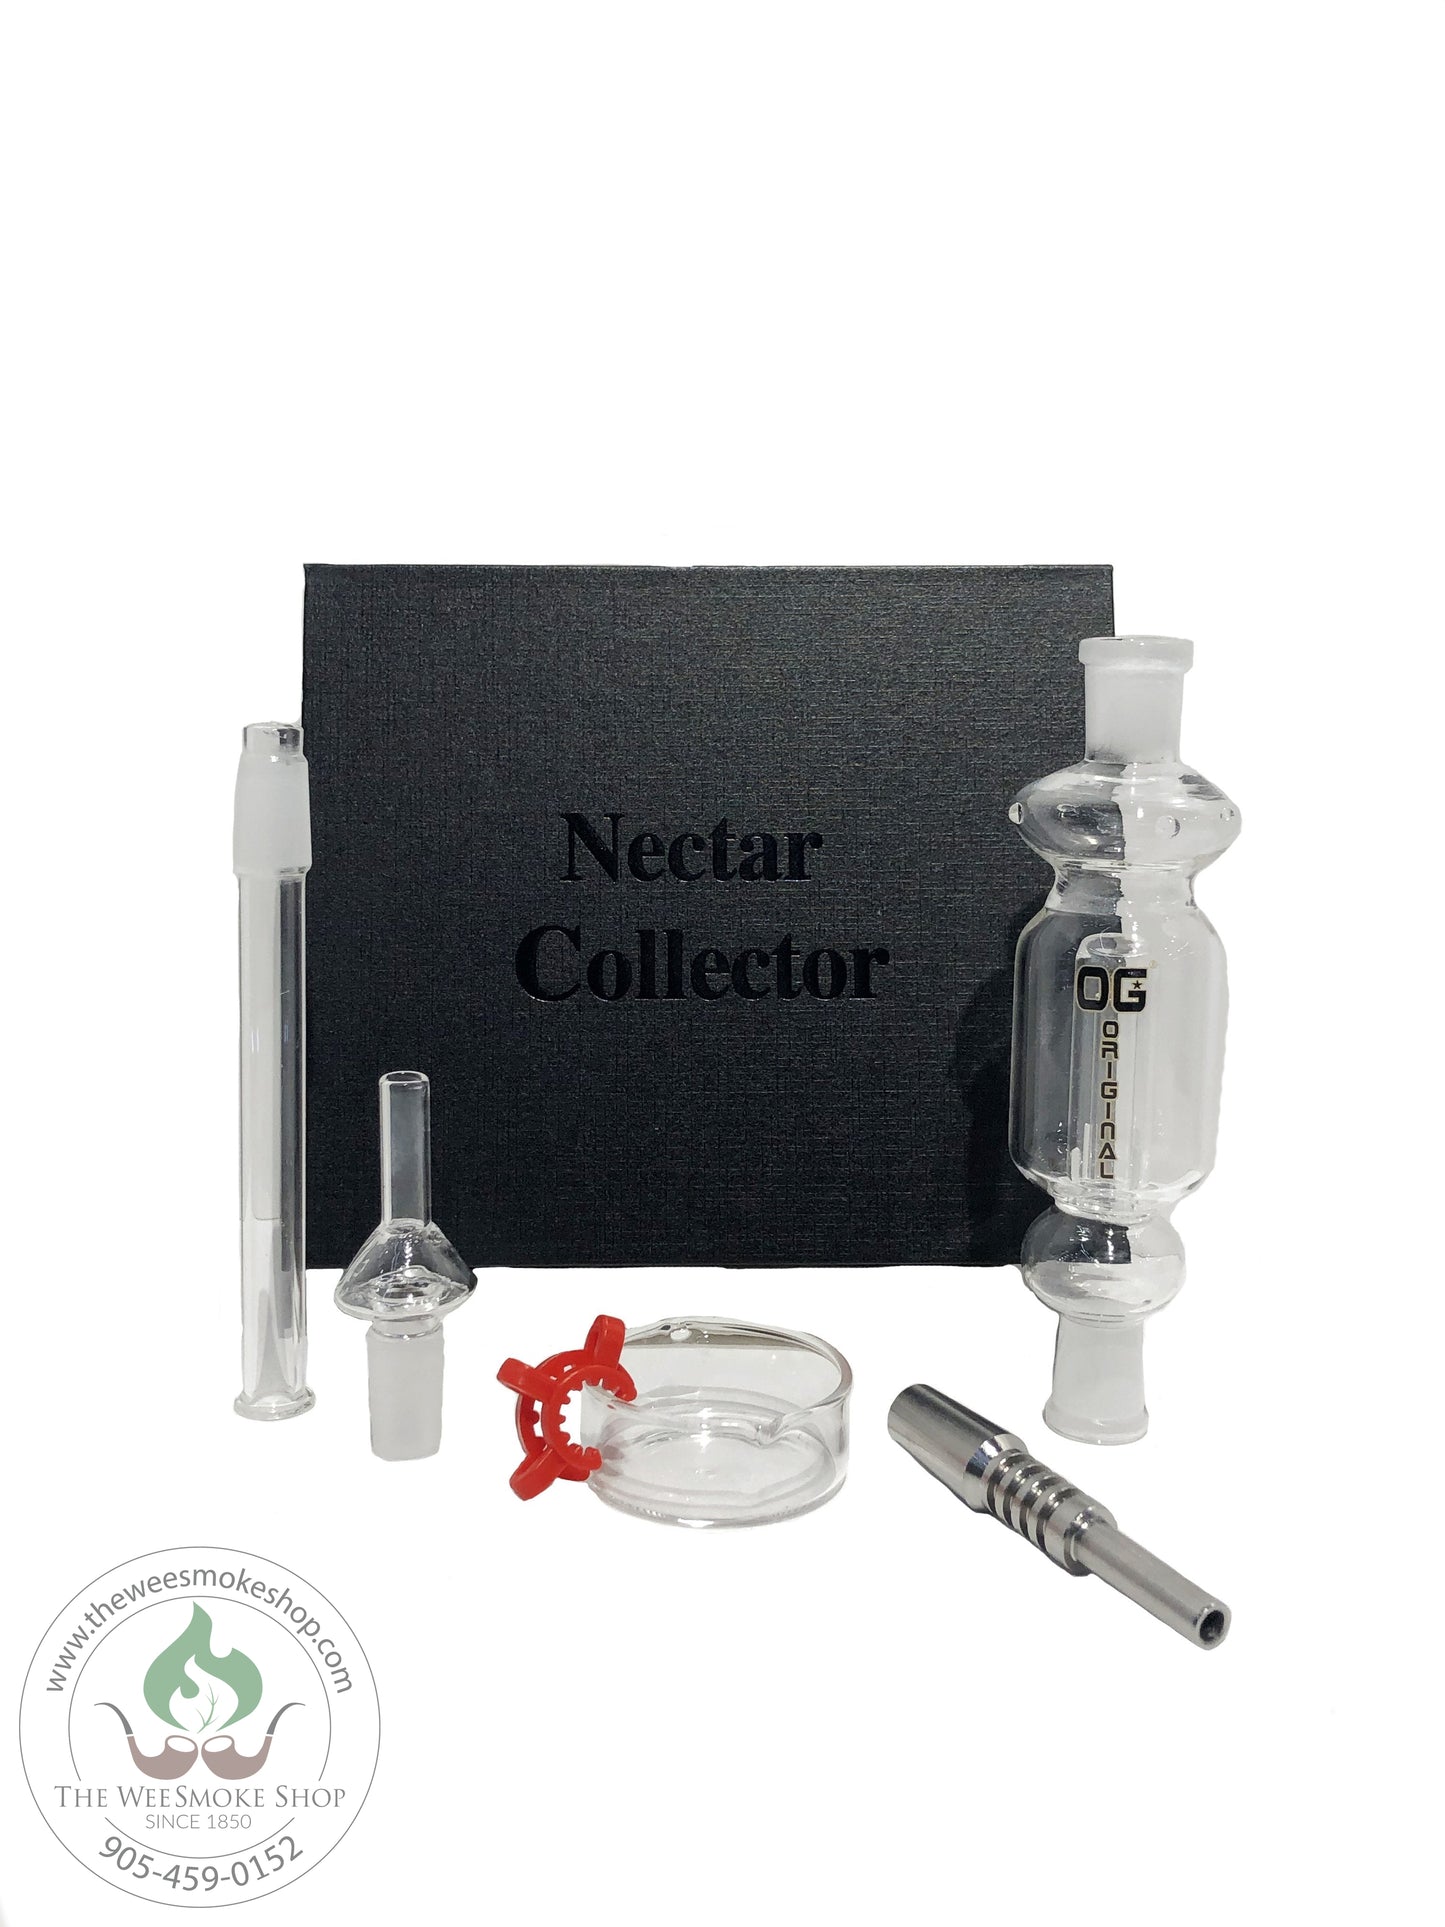 OG Nectar Collector